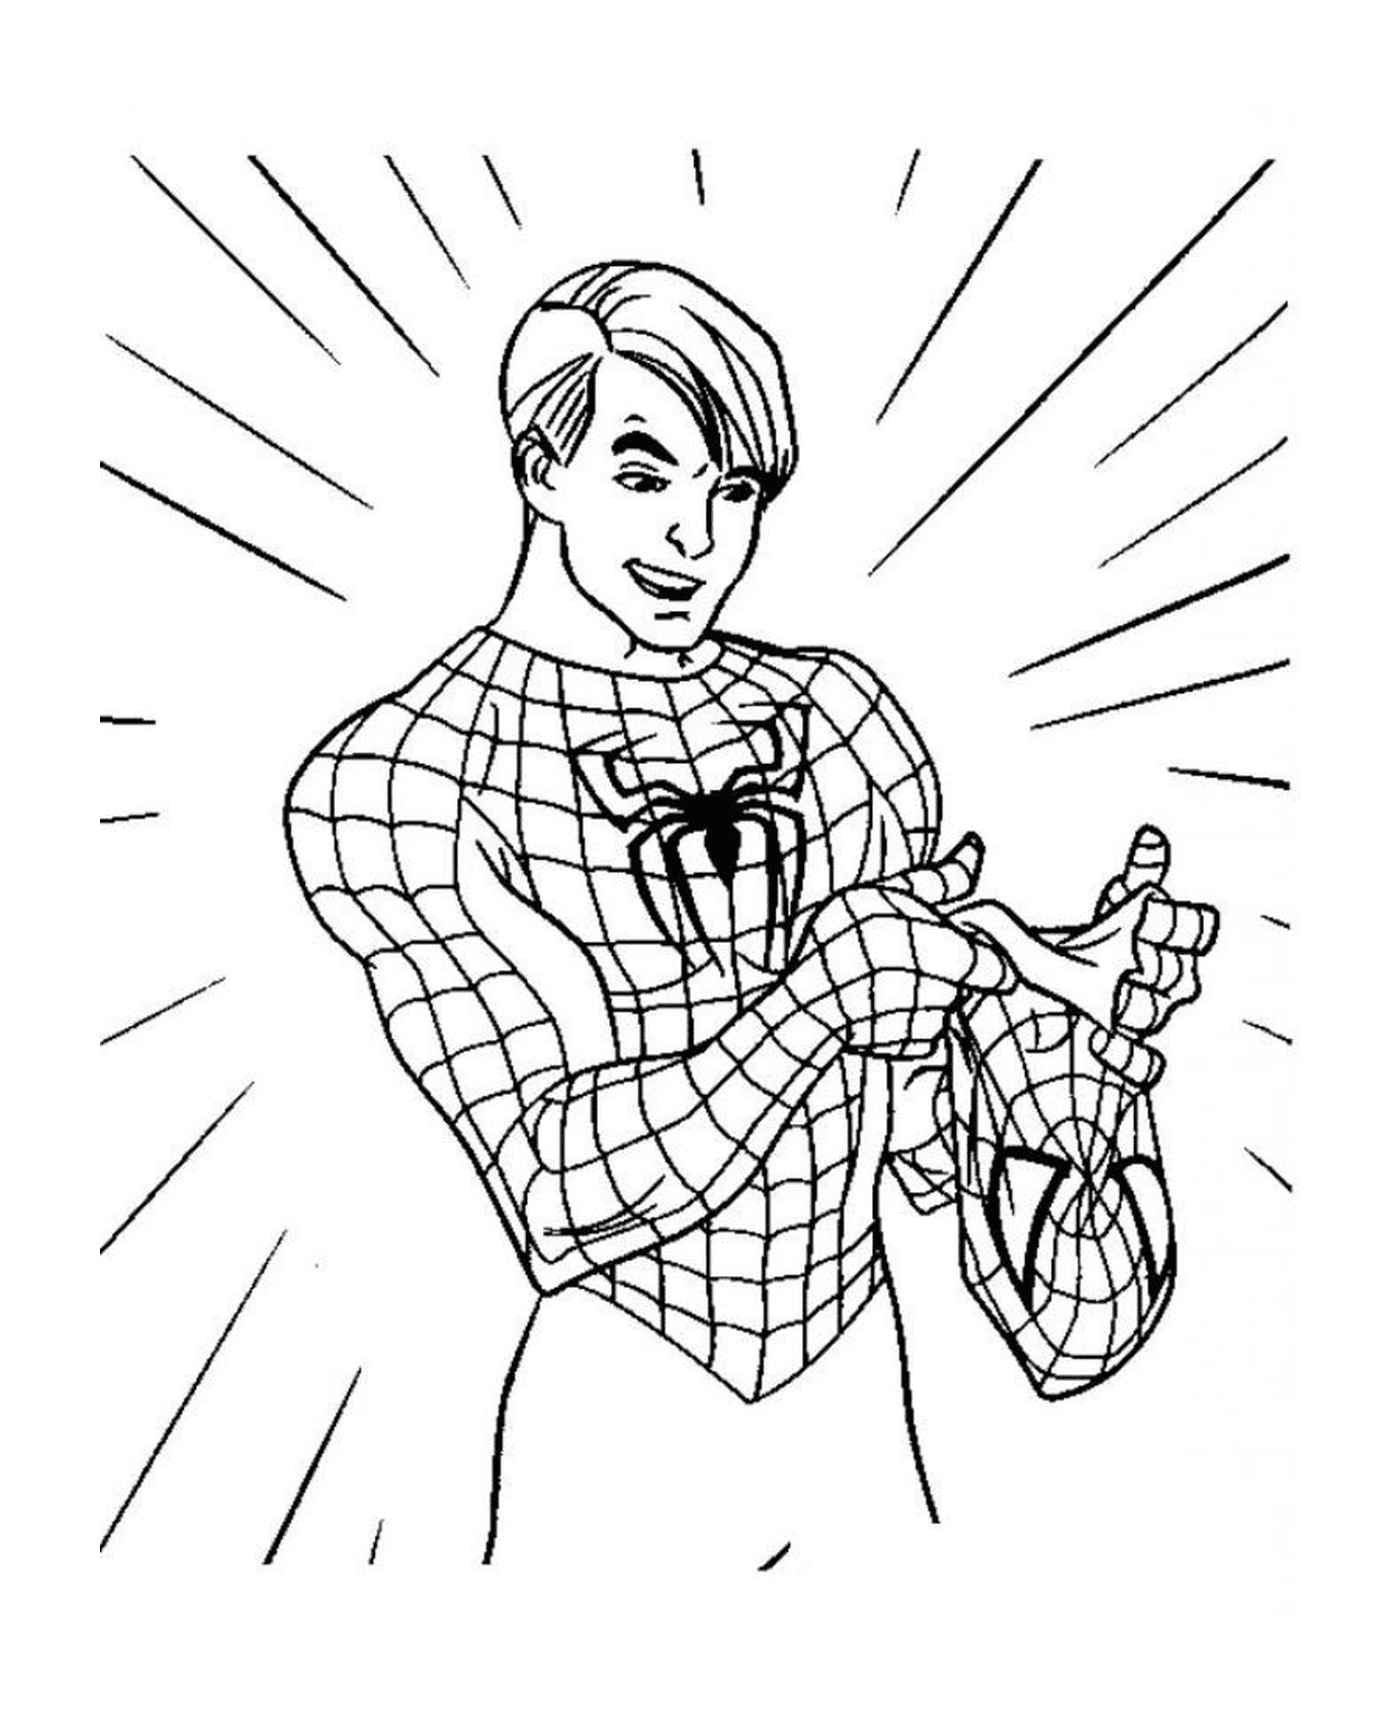  Peter Parker holds Spiderman 